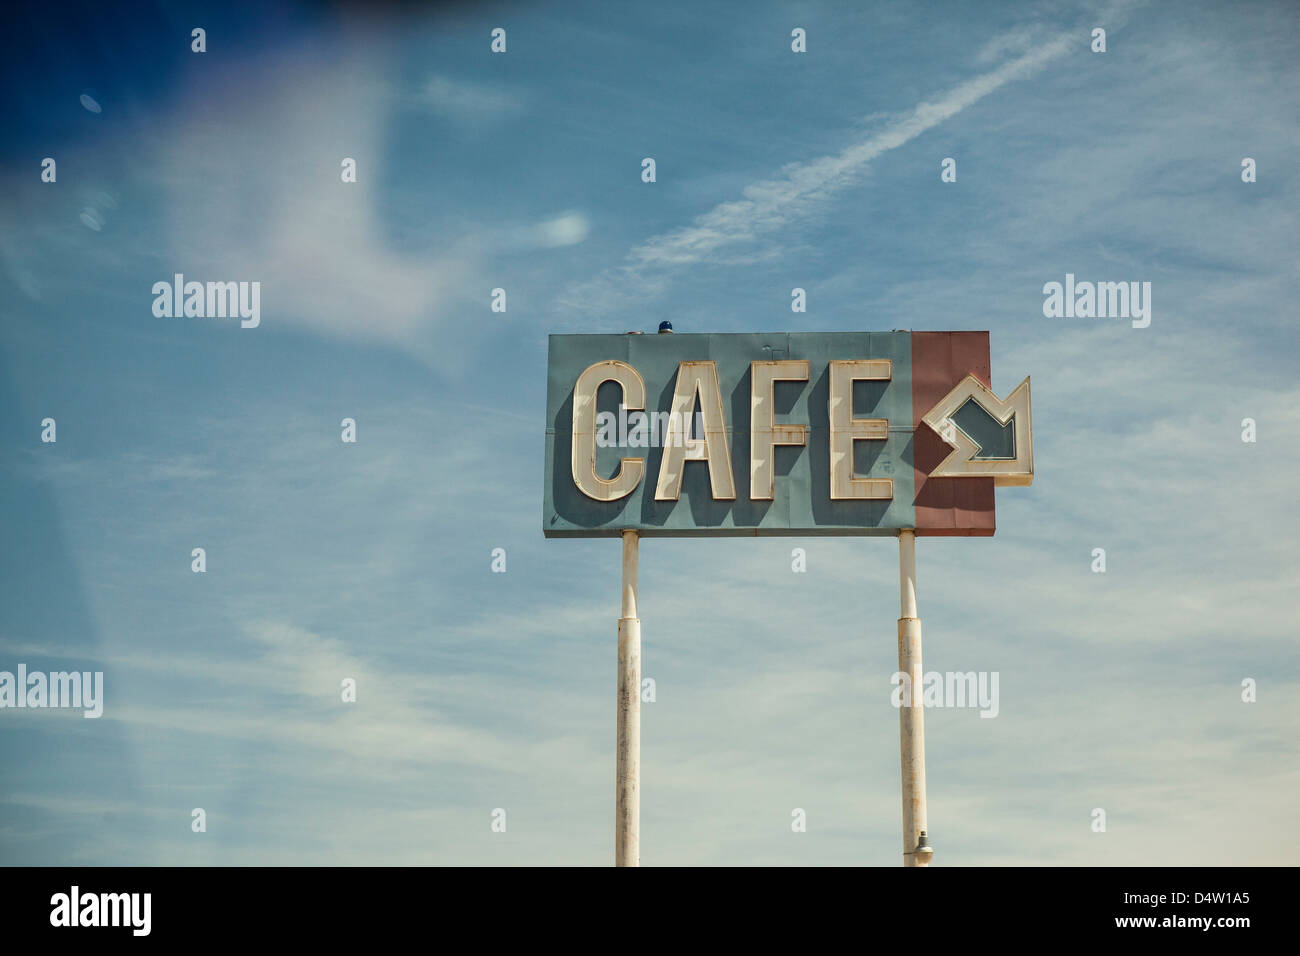 Cafe Neon Sign against blue sky Banque D'Images